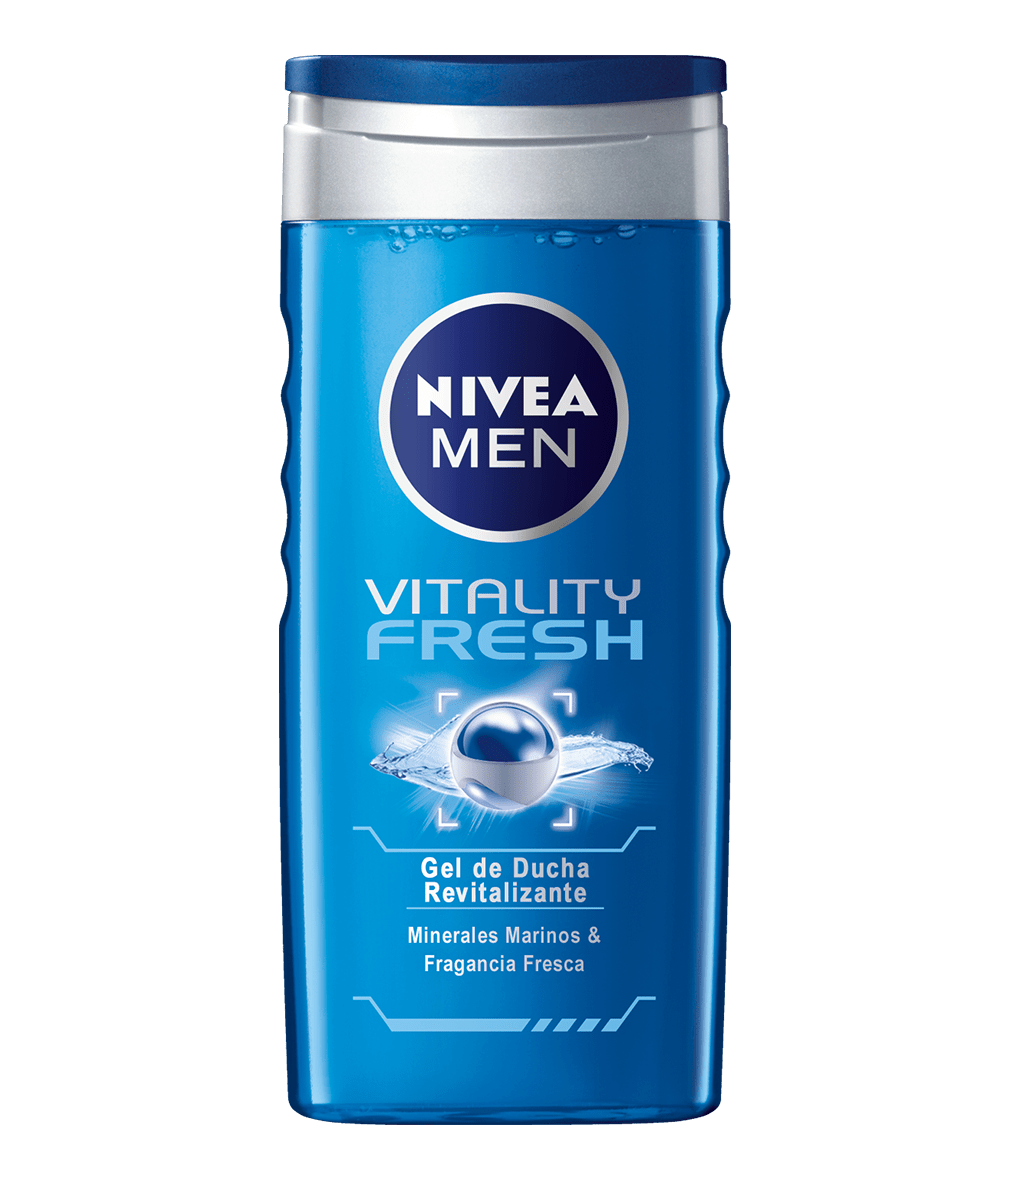 NIVEA Vitality Fresh – Gel de Ducha Revitalizante